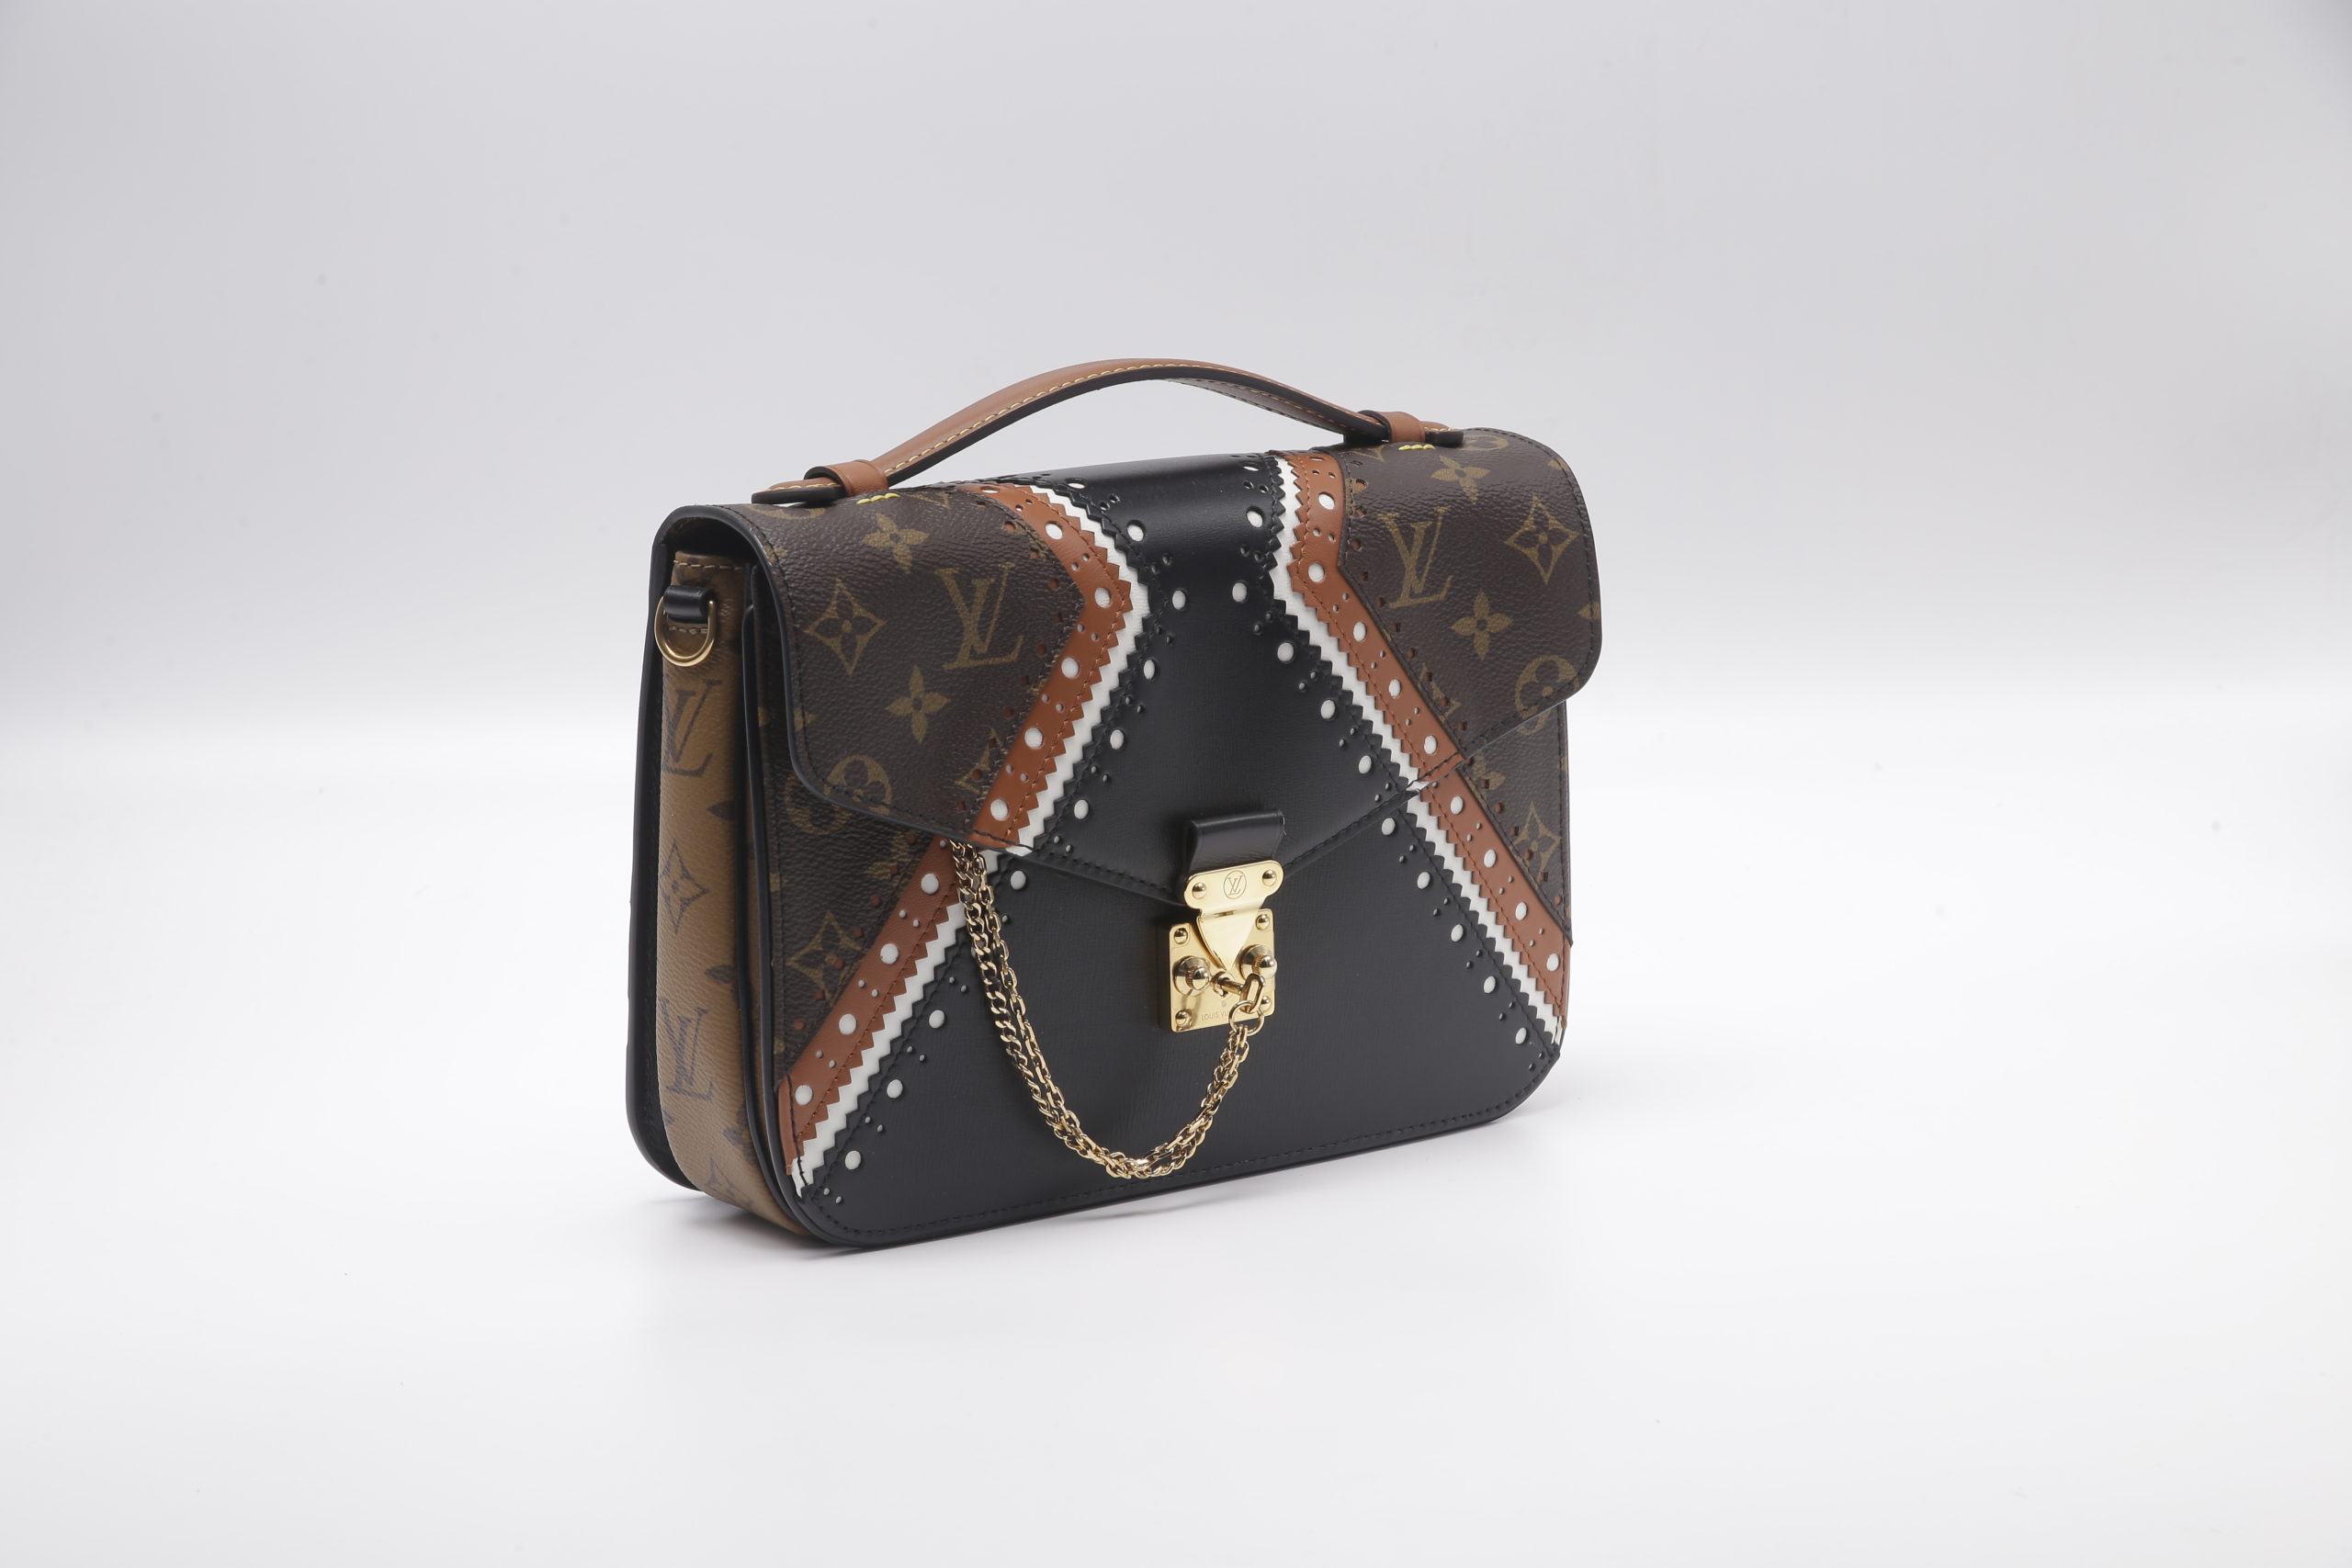 Louis Vuitton Bum Bag - Selectionne PH